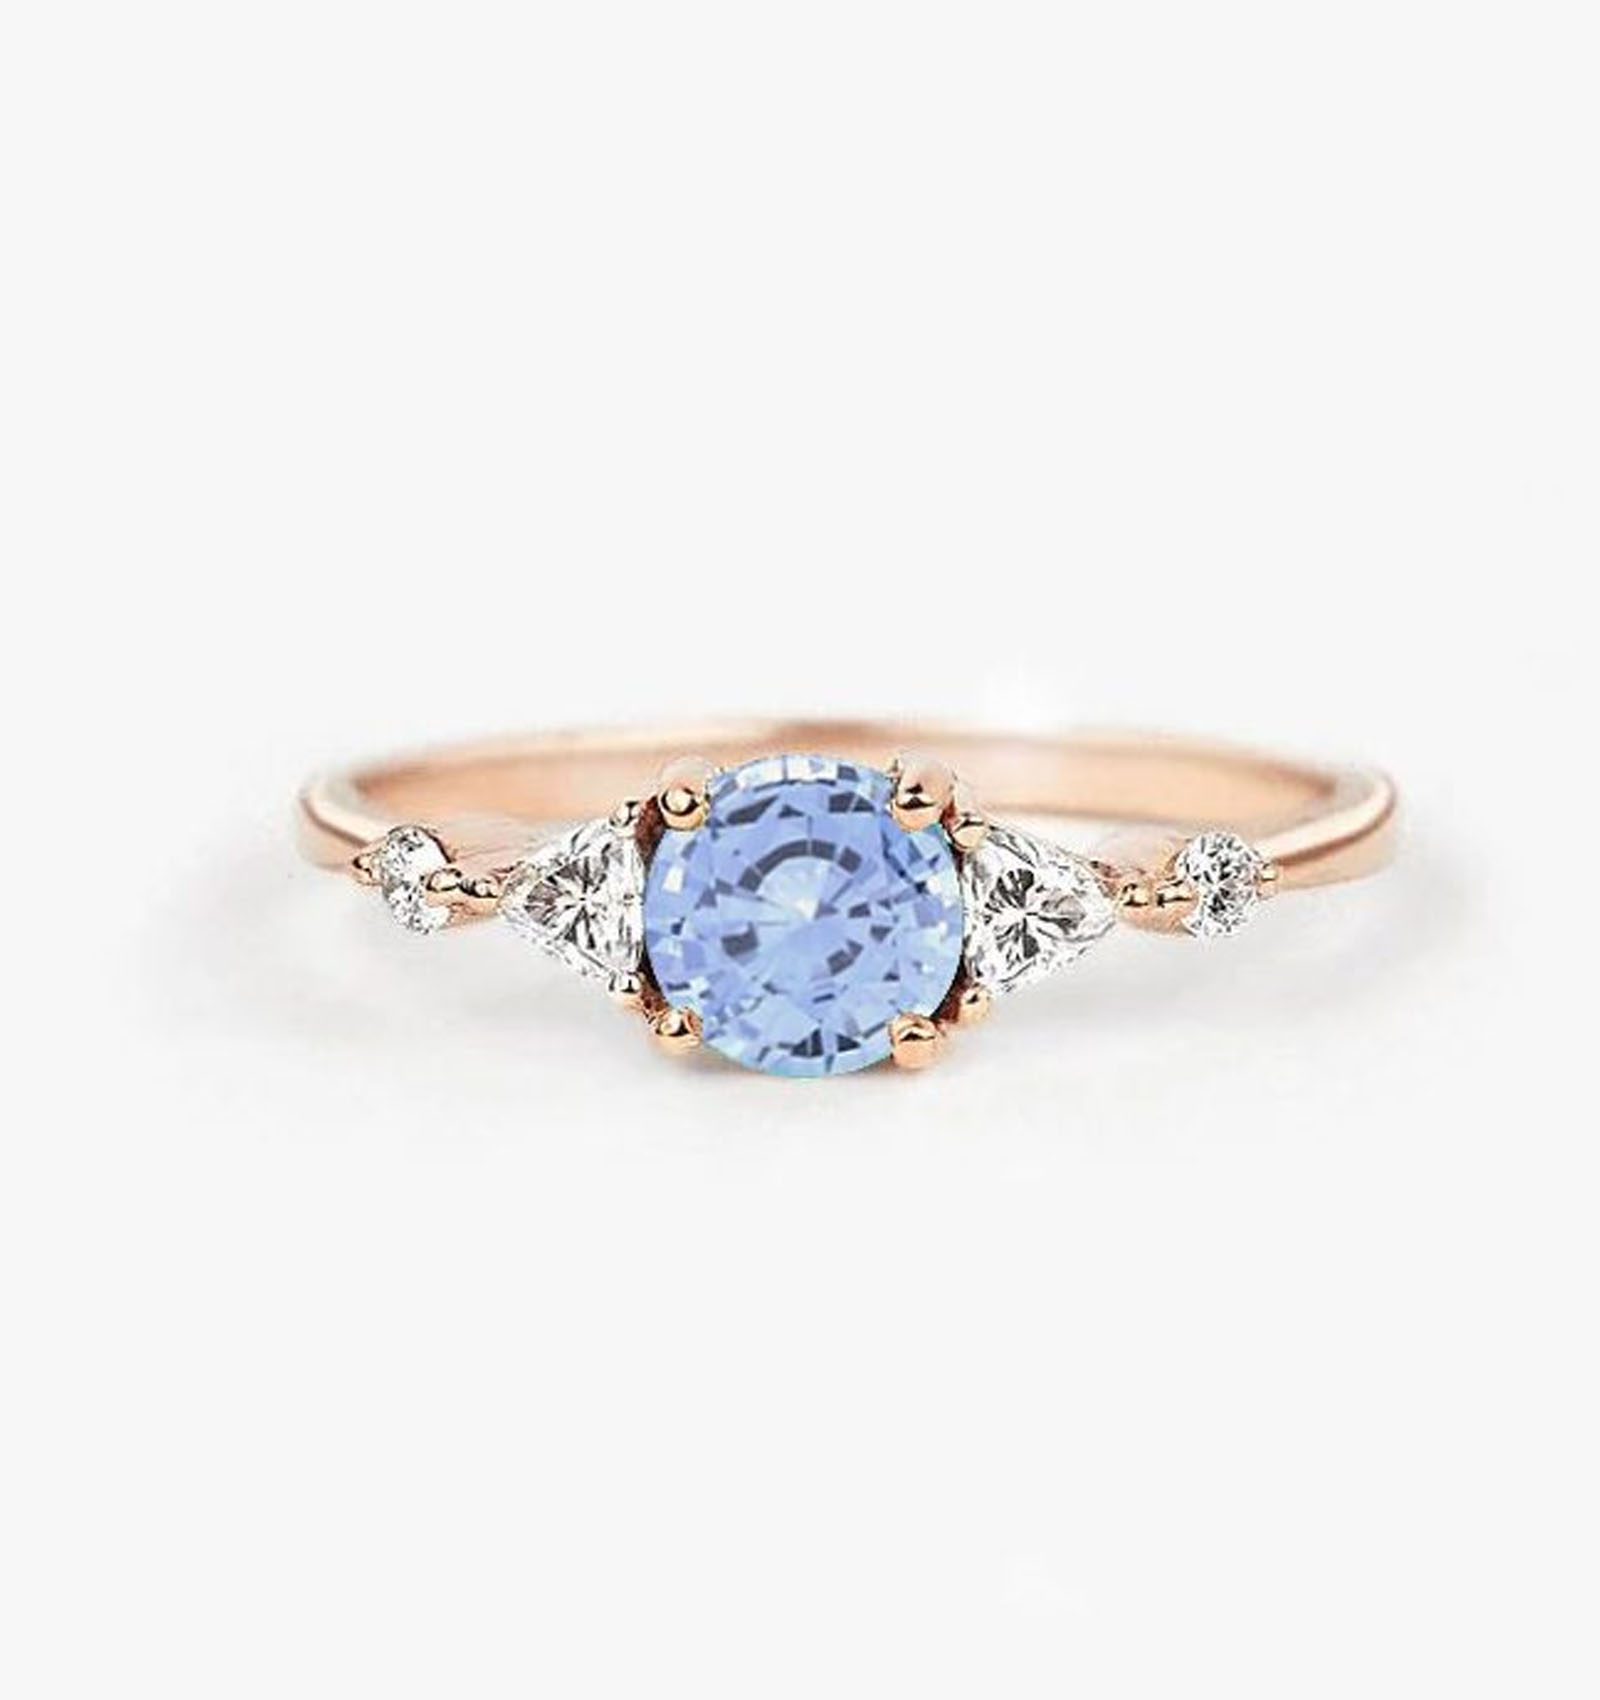 6mm aquamarine bridal ring